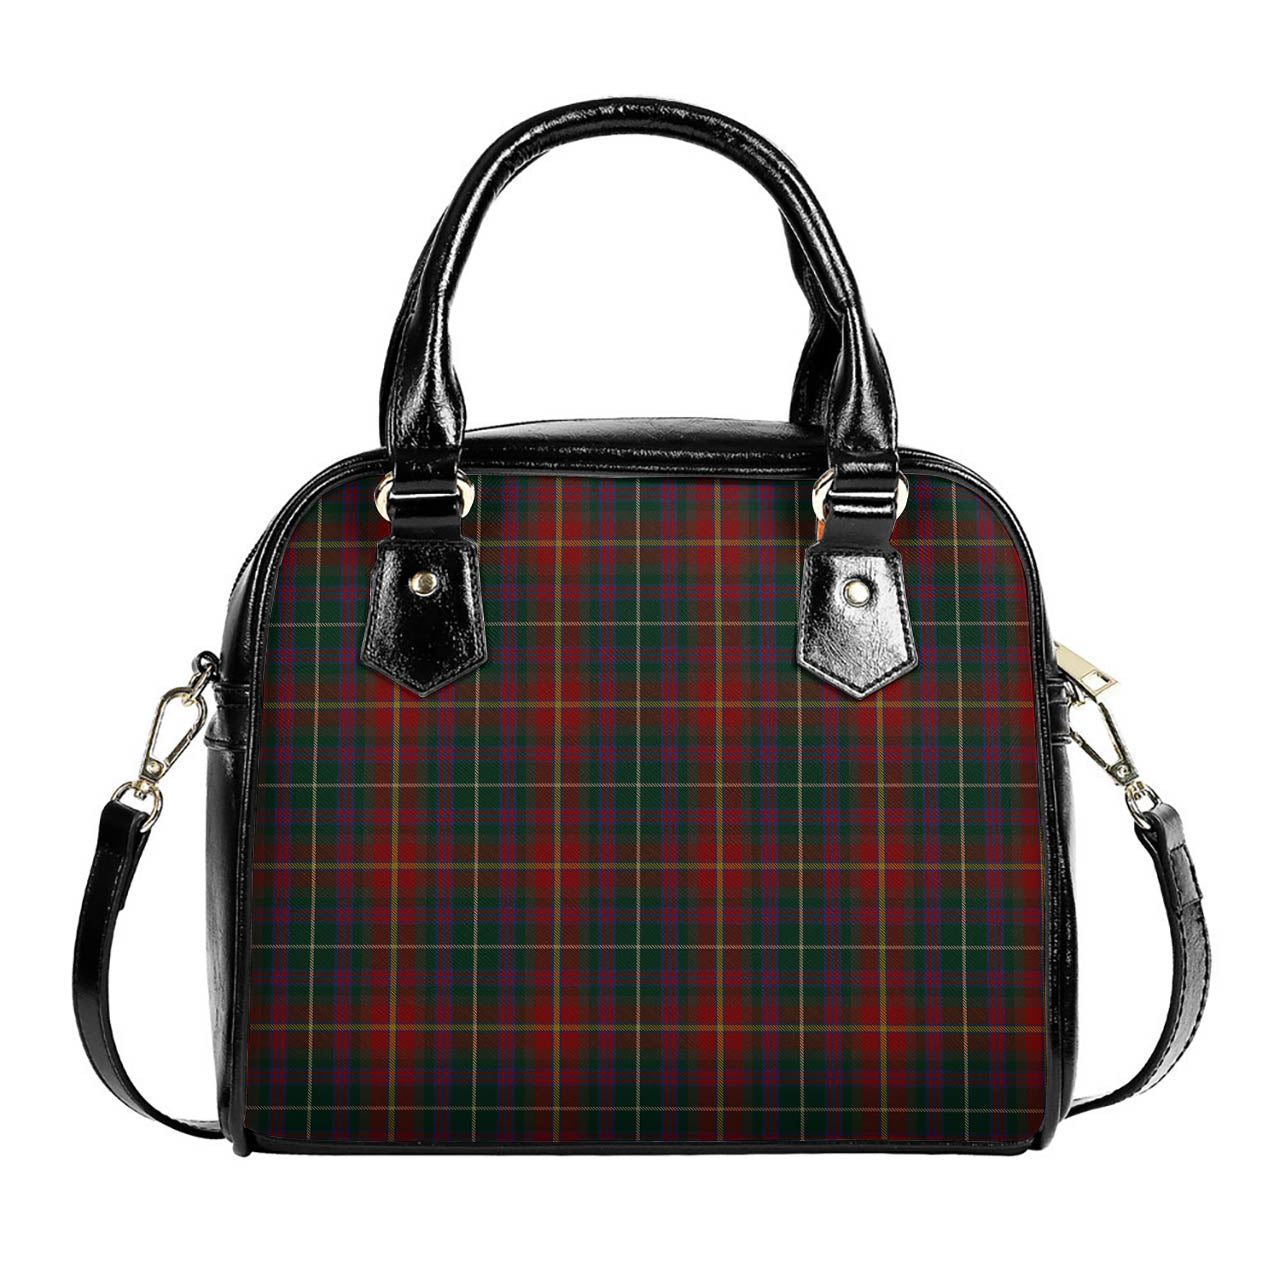 Meath County Ireland Tartan Shoulder Handbags One Size 6*25*22 cm - Tartanvibesclothing